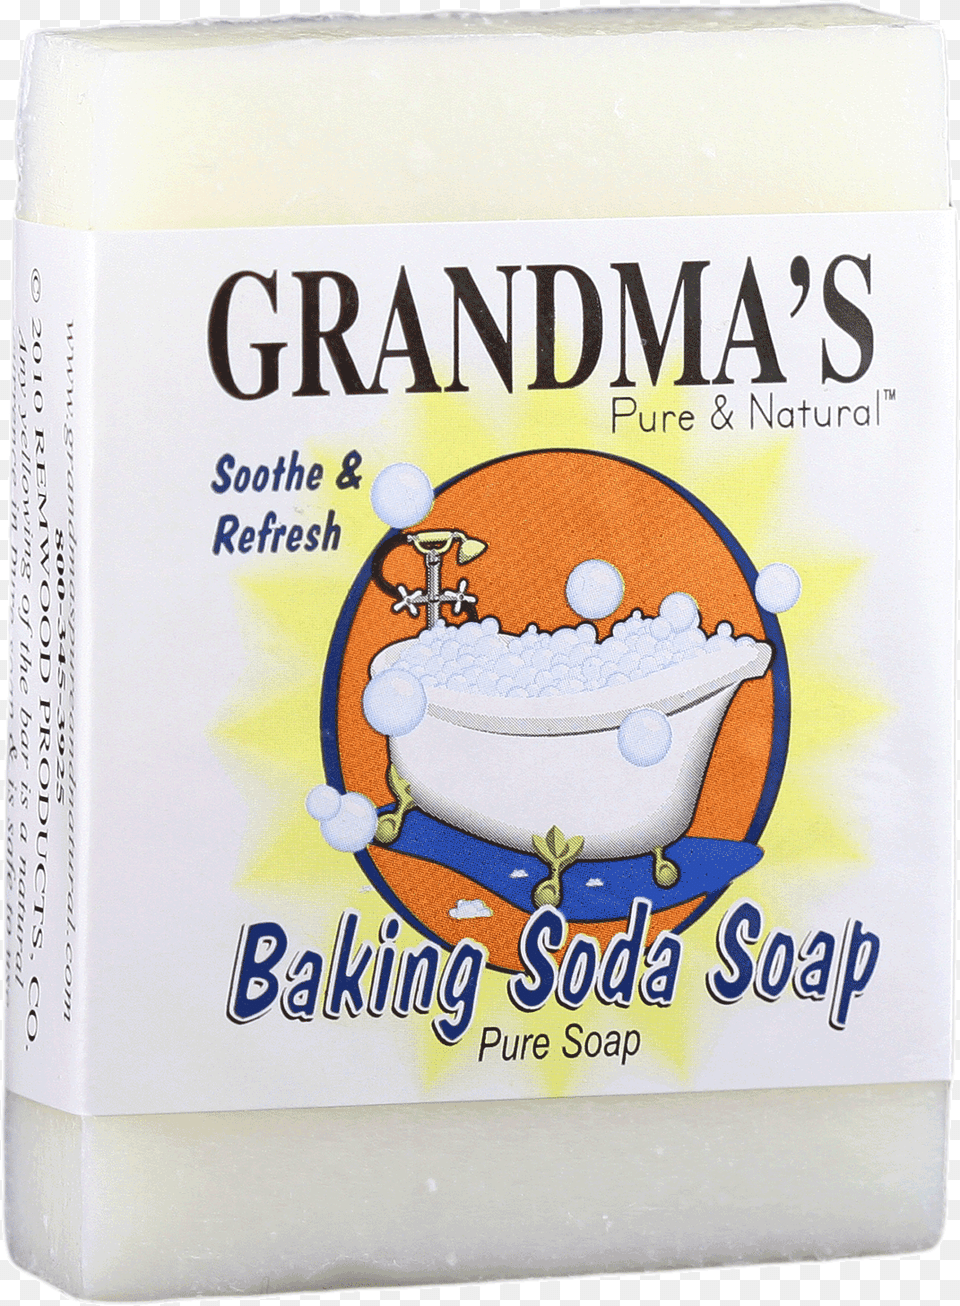 Baking Soda Bar Remwood Products Co Grandma39s Baking Soda Soap 4 Oz, Dairy, Food Free Png